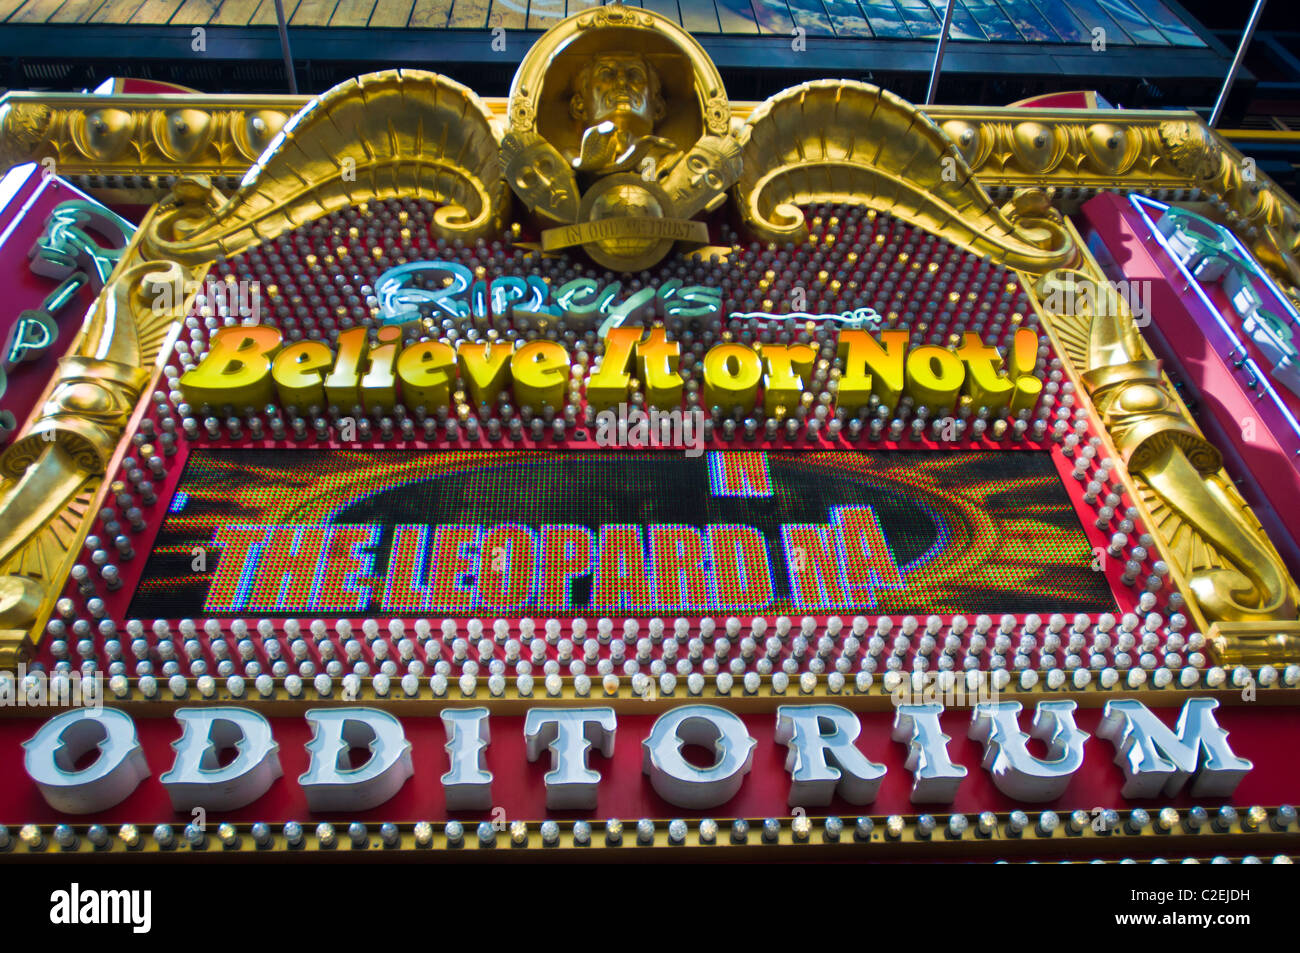 Ripley's Believe It or Not ! Odditorium à la 42e Rue, Manhattan, New York City, USA Banque D'Images